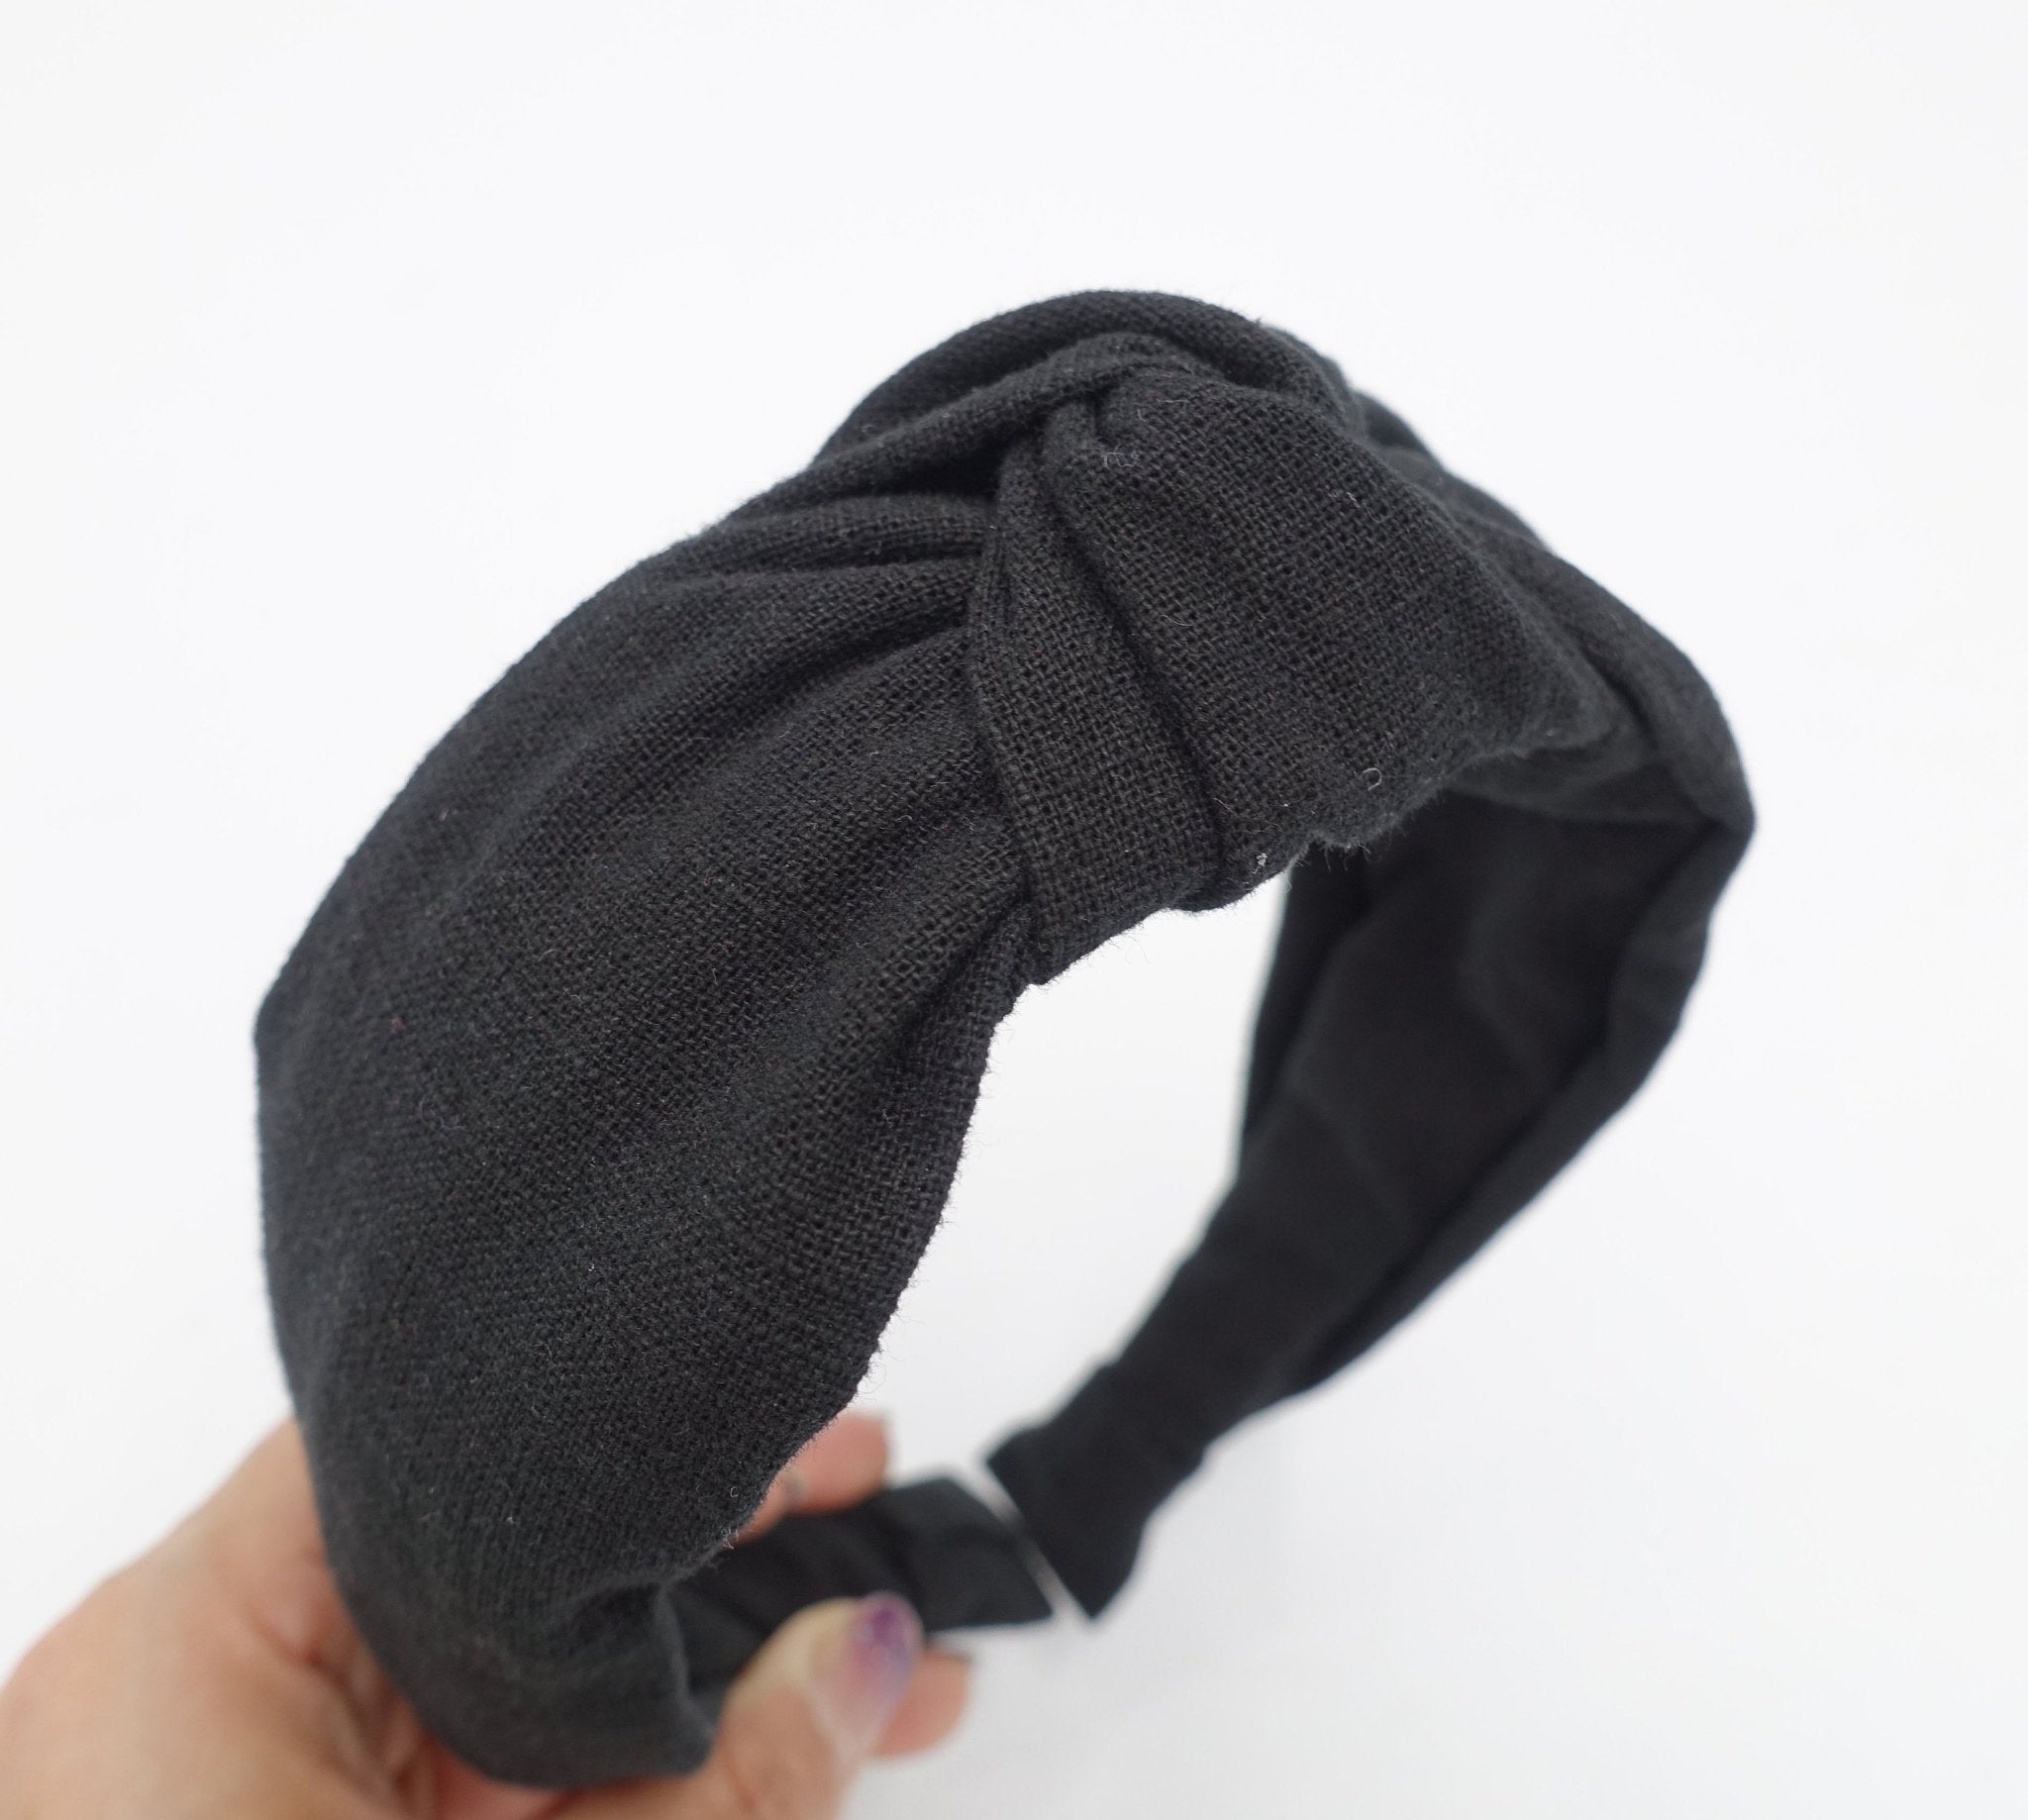 veryshine.com Headband Black linen blend fabric top knot headband basic style hairband women hair accessory